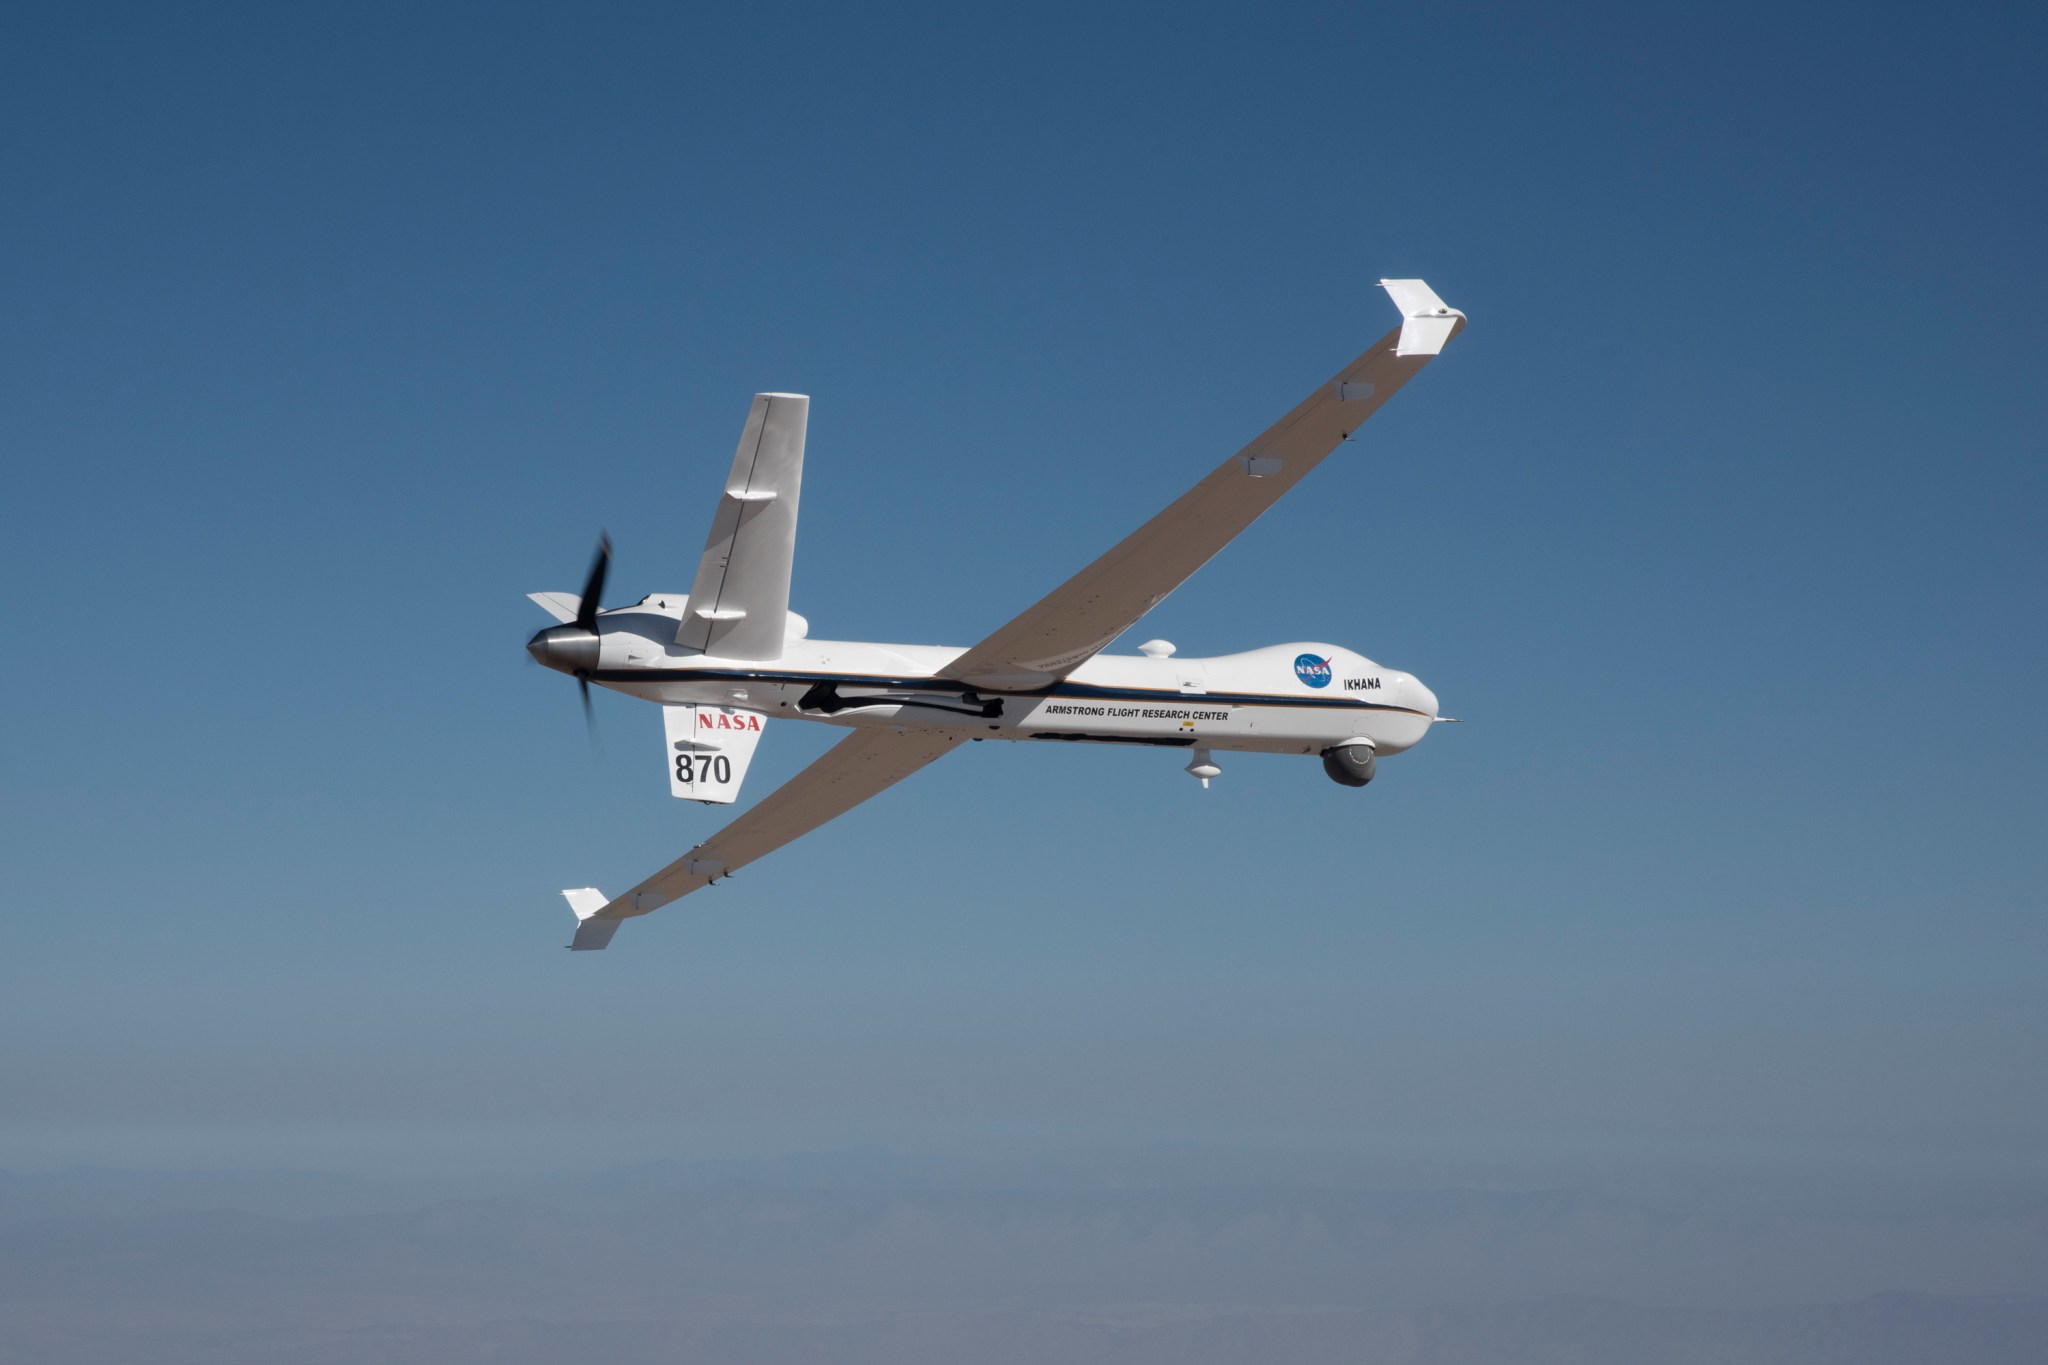 NASA’s remotely-piloted Ikhana aircraft